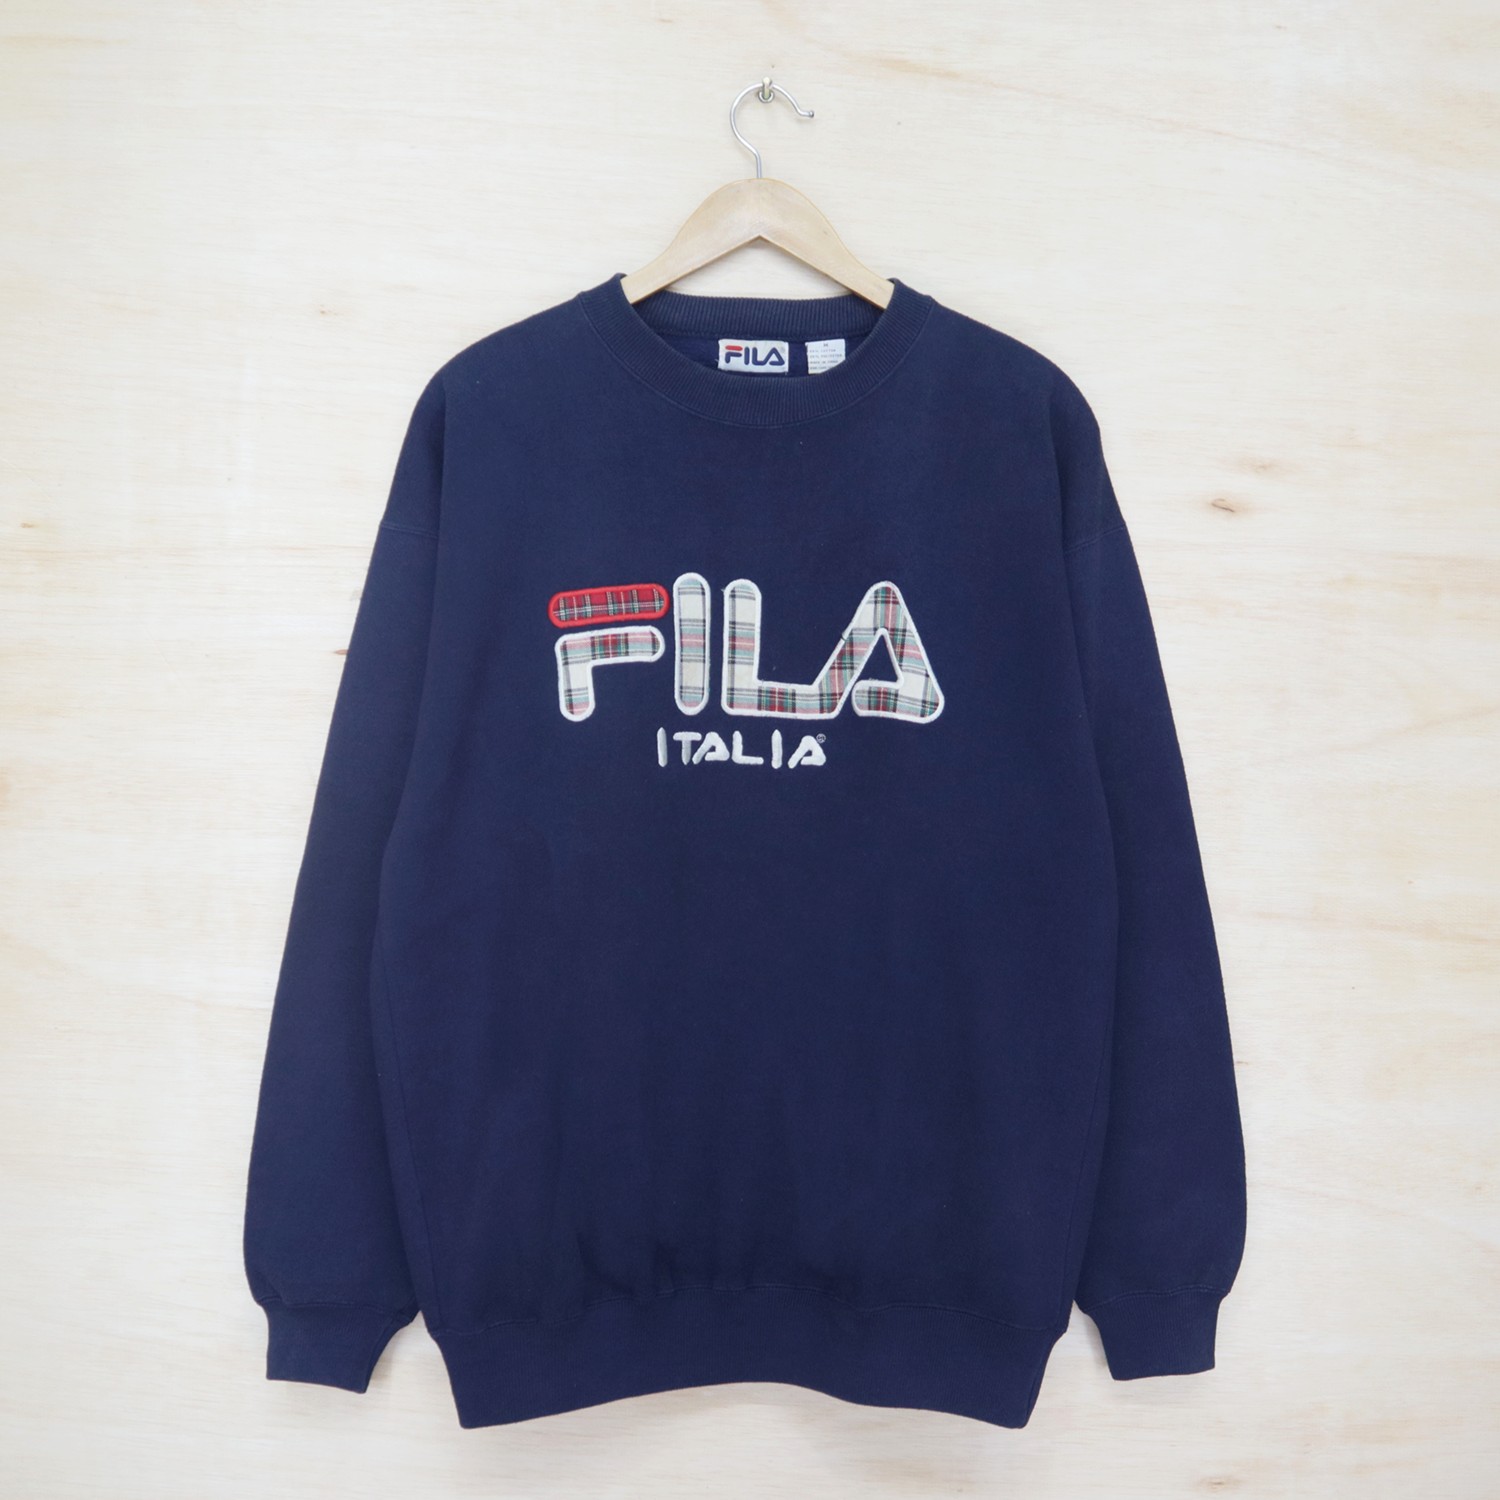 Vintage 90s FILA Italia Big Logo Sweater Sweatshirt Pullover Jumper - 1